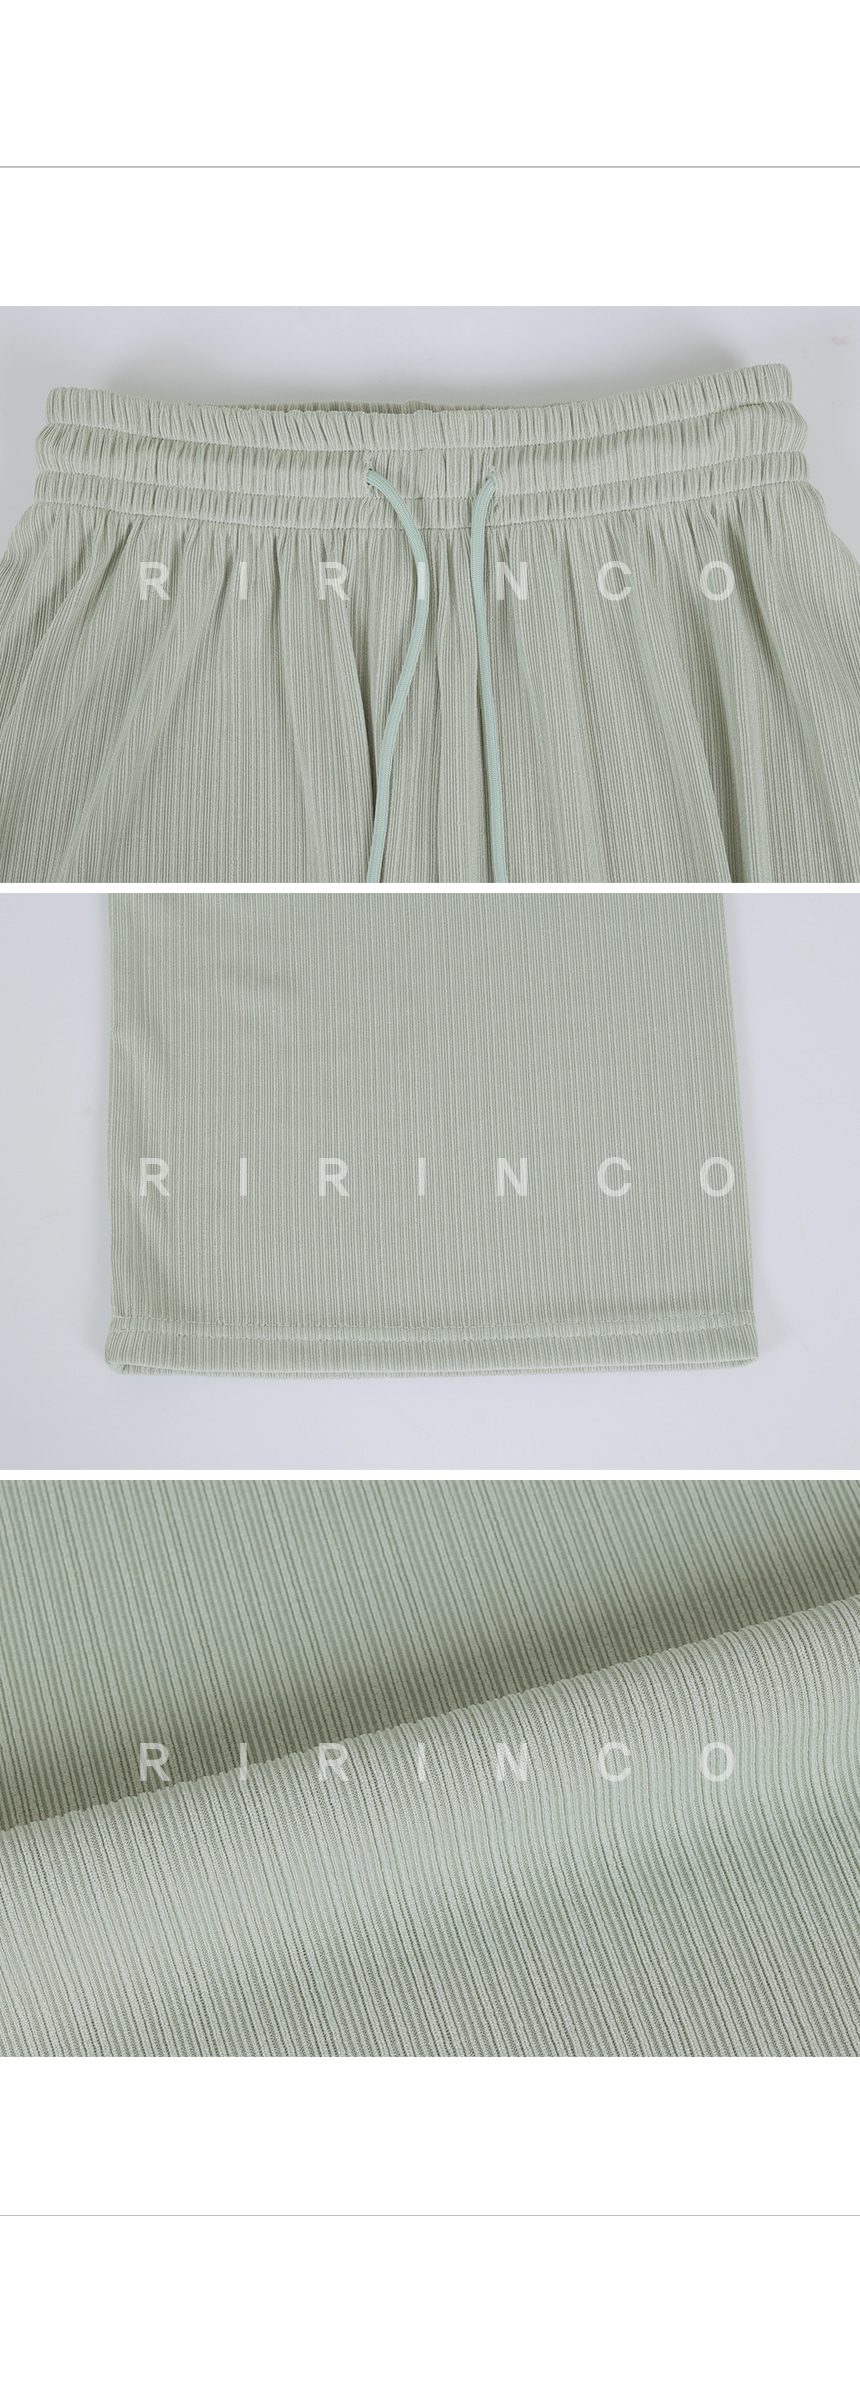 RIRINCO [ショート丈/ロング丈] ストリングウエストゴムリブワイドフィットパンツ